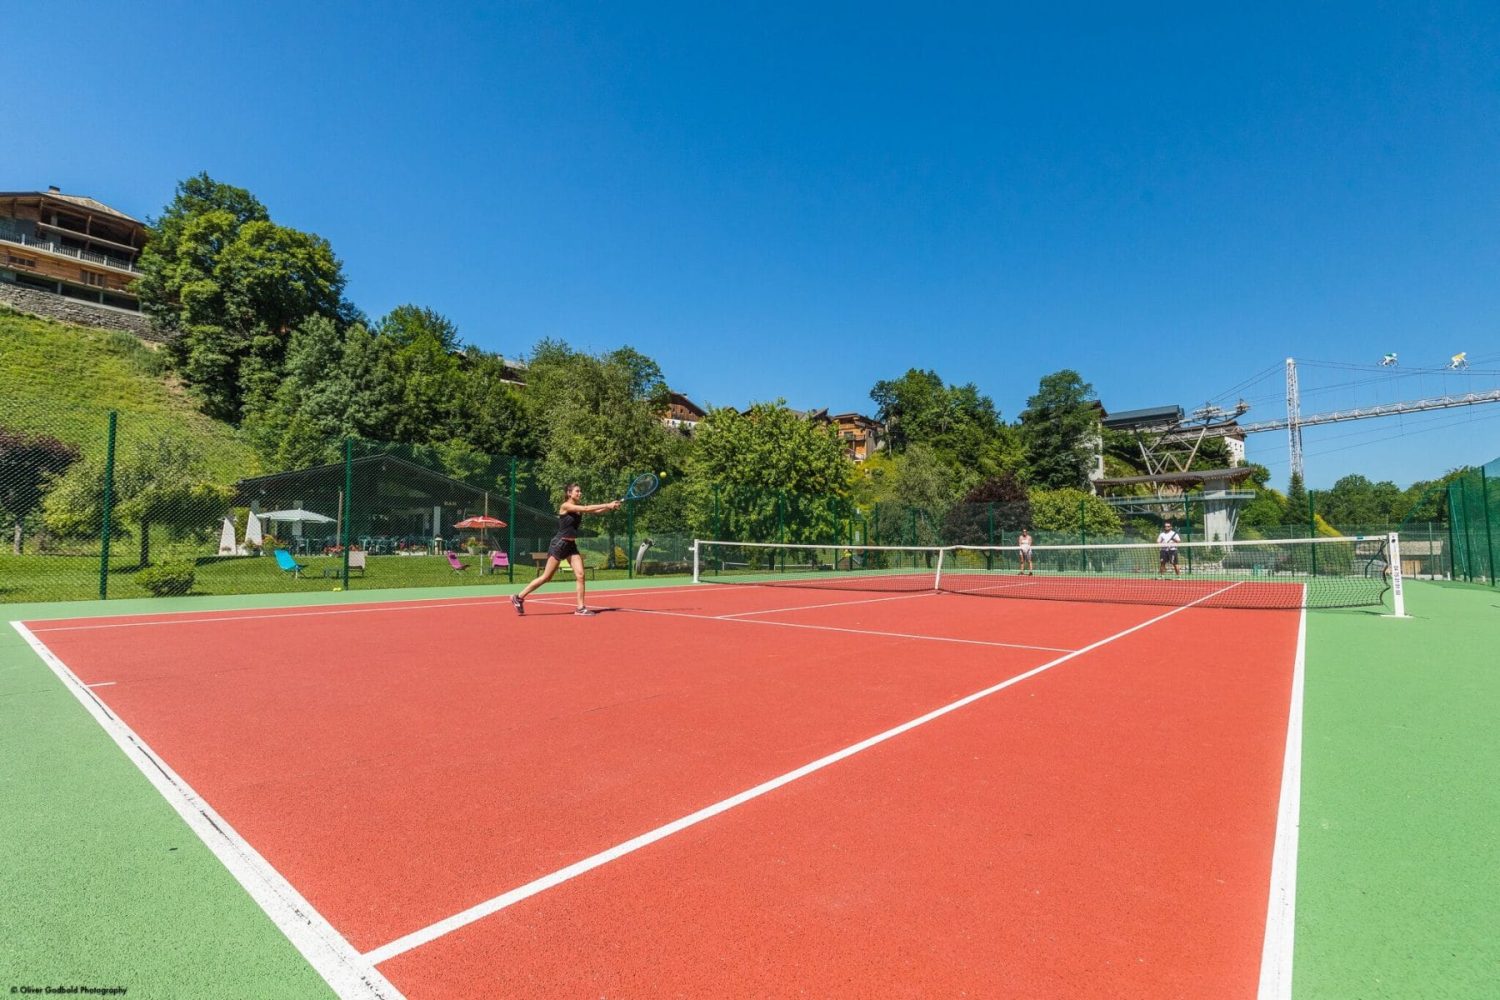 Morzine tennis courts